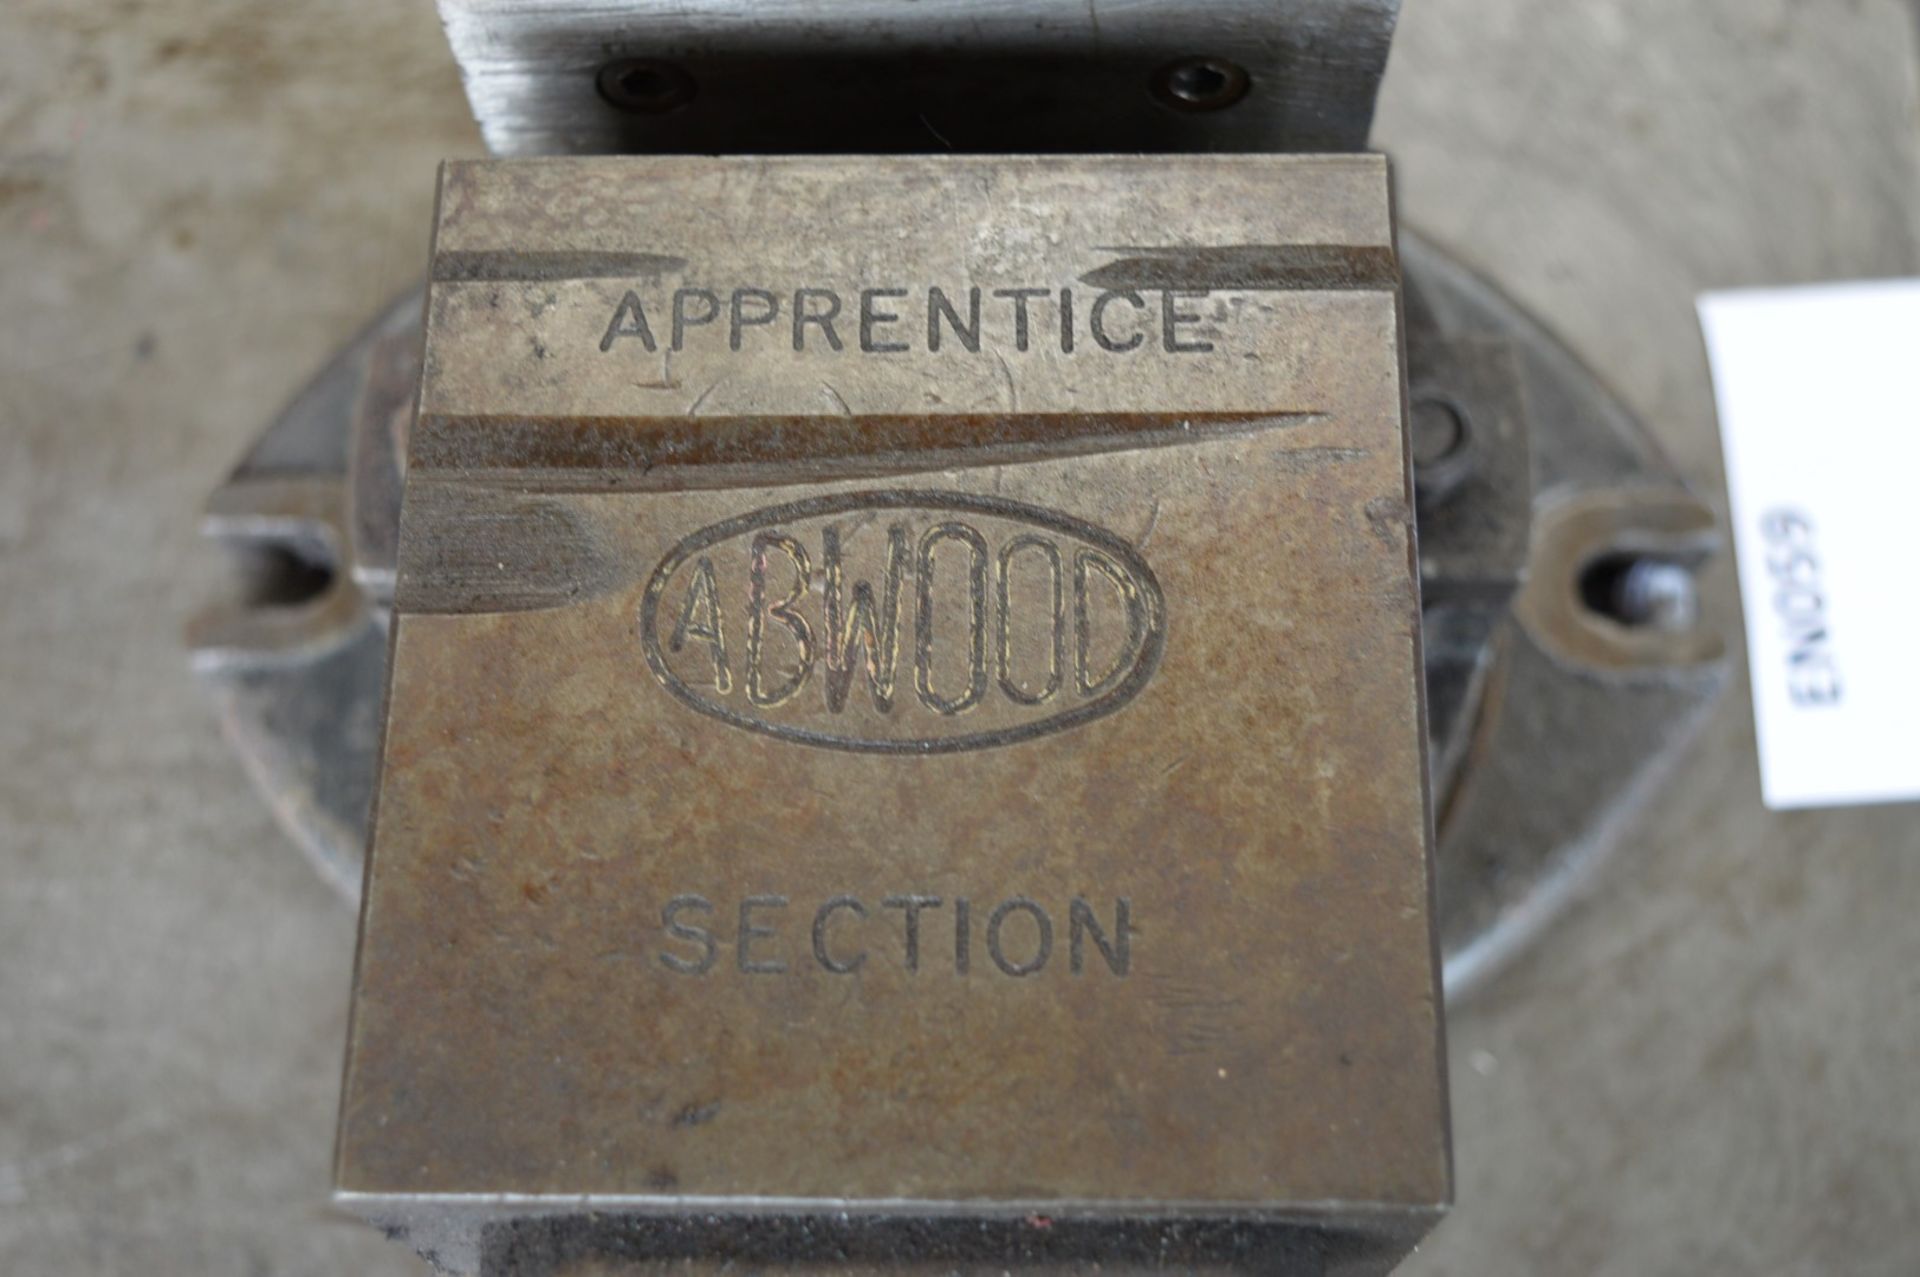 1 x Abwood Heavy Duty Tilting & Swiveling Machine Vice - CL202 - Ref EN059 - Location: Worcester - Image 4 of 6